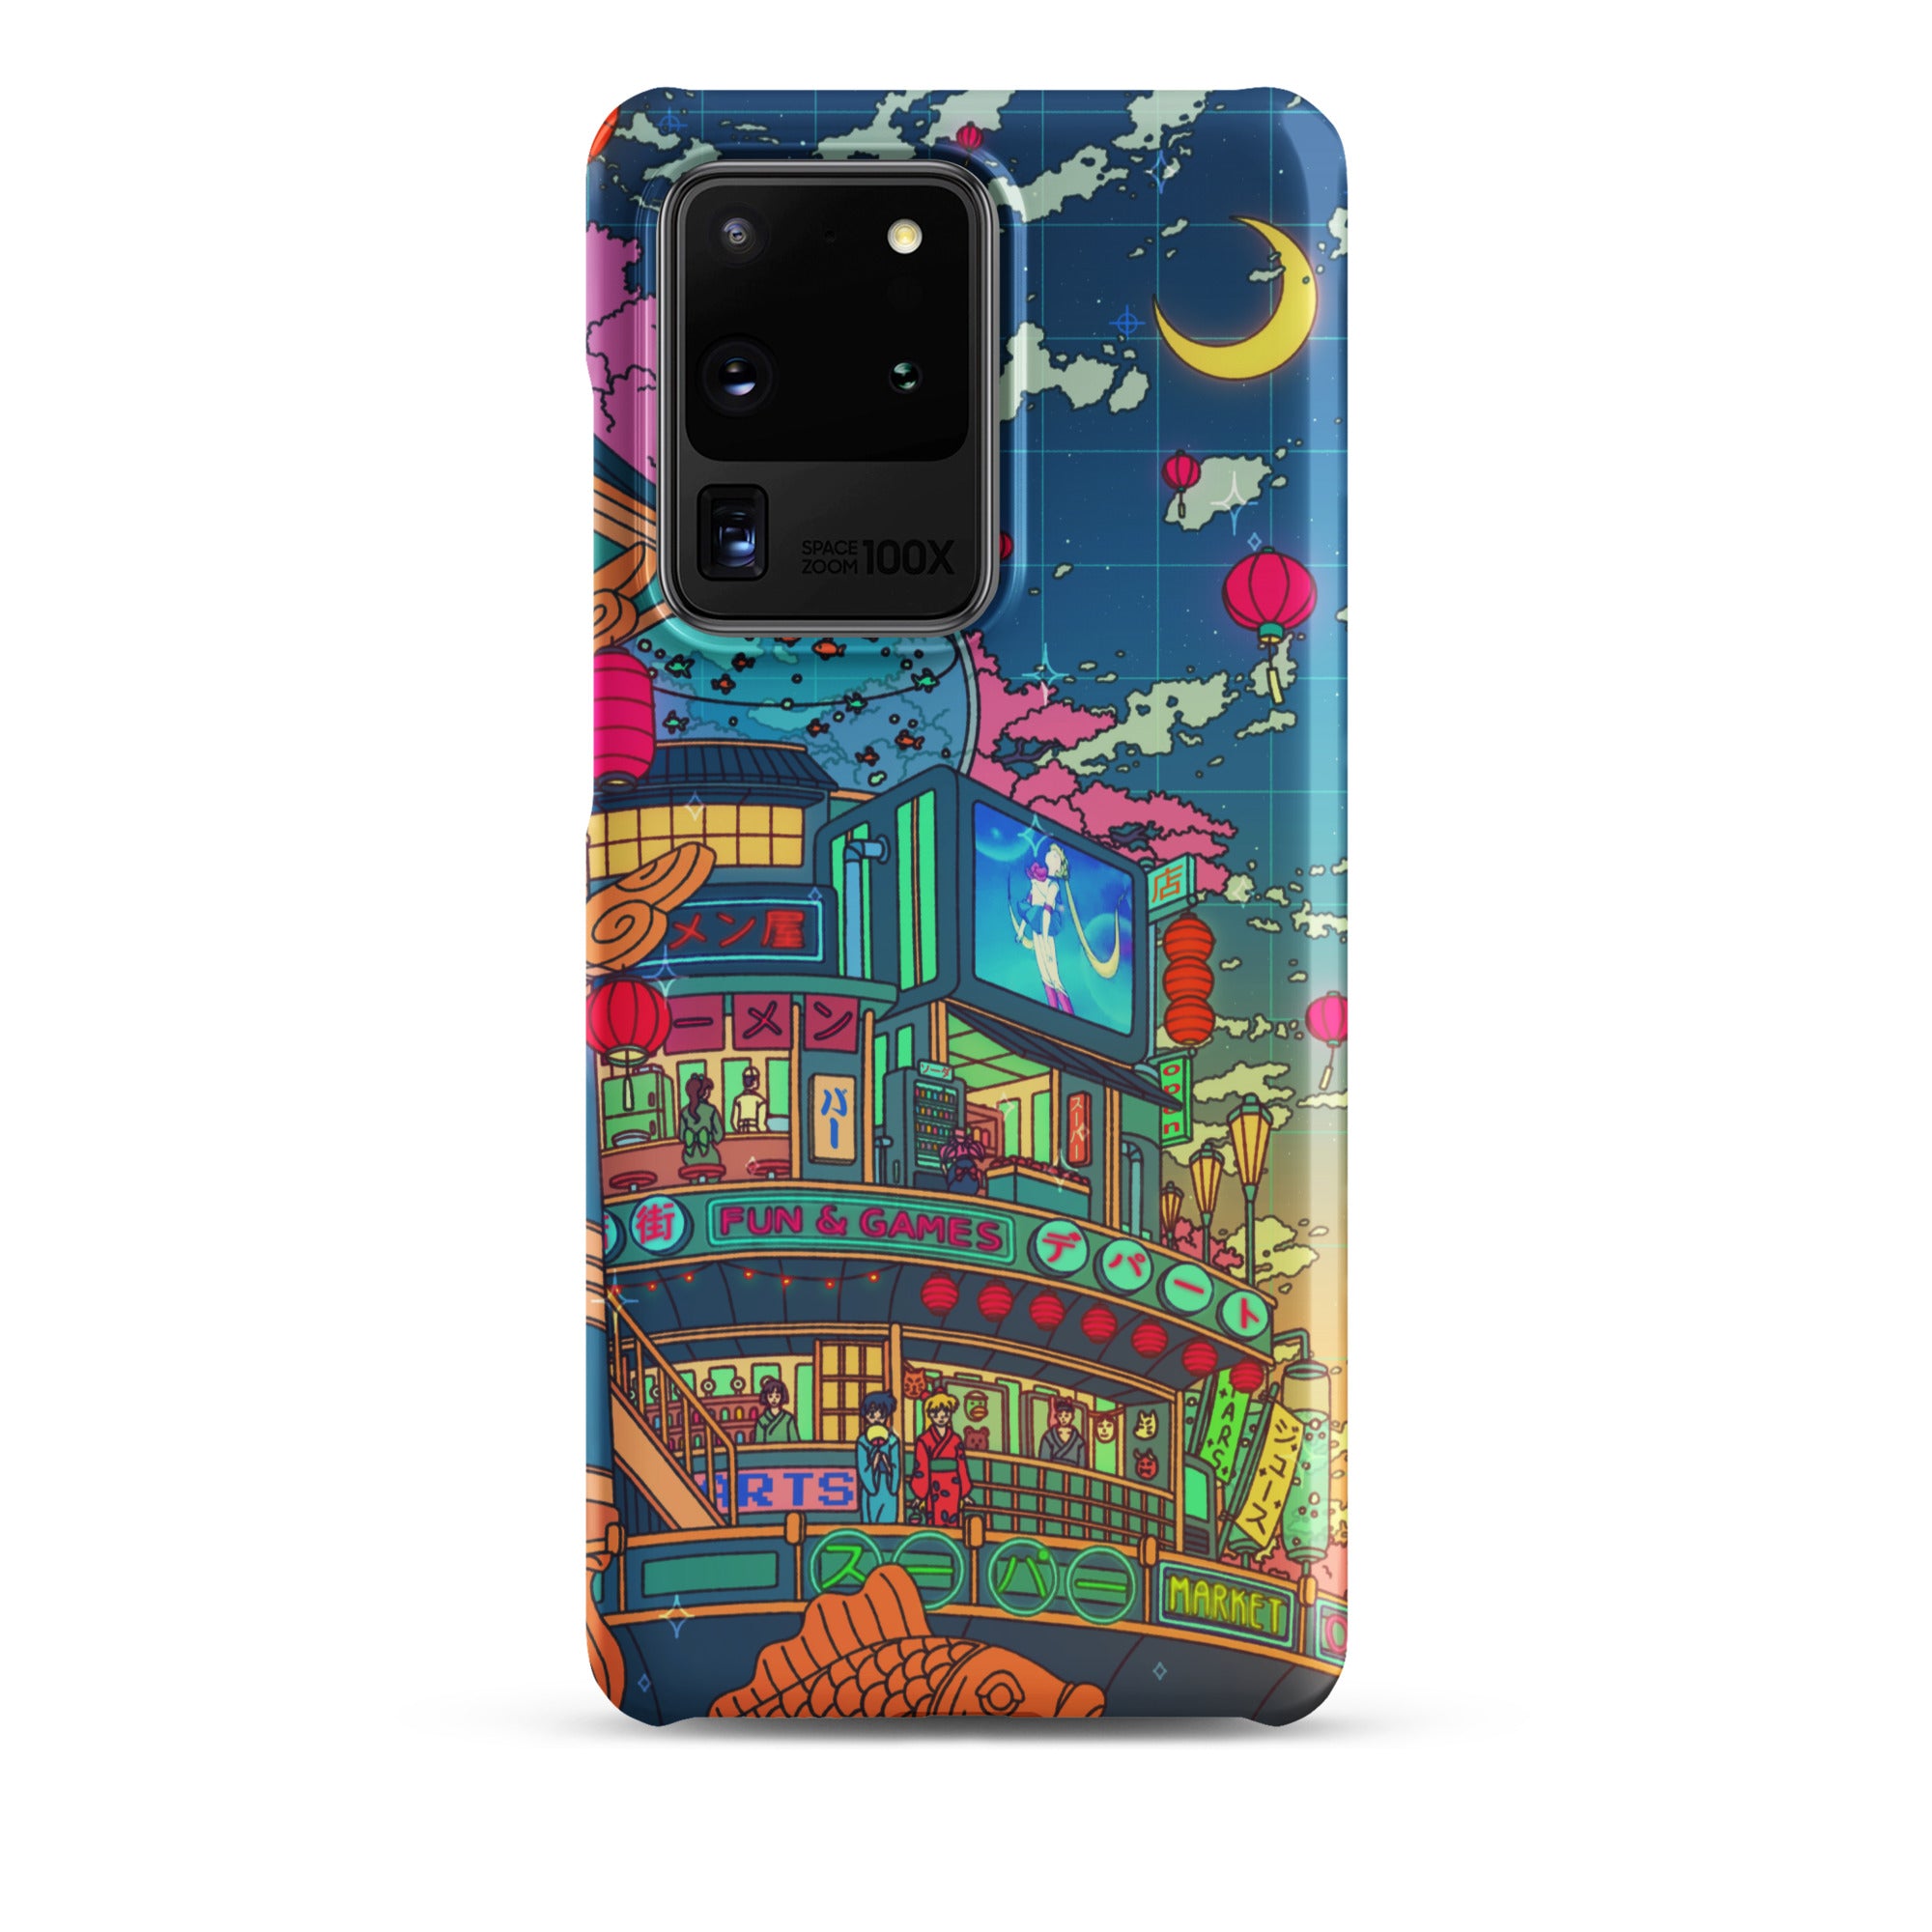 Moon Festival Samsung Phone Case